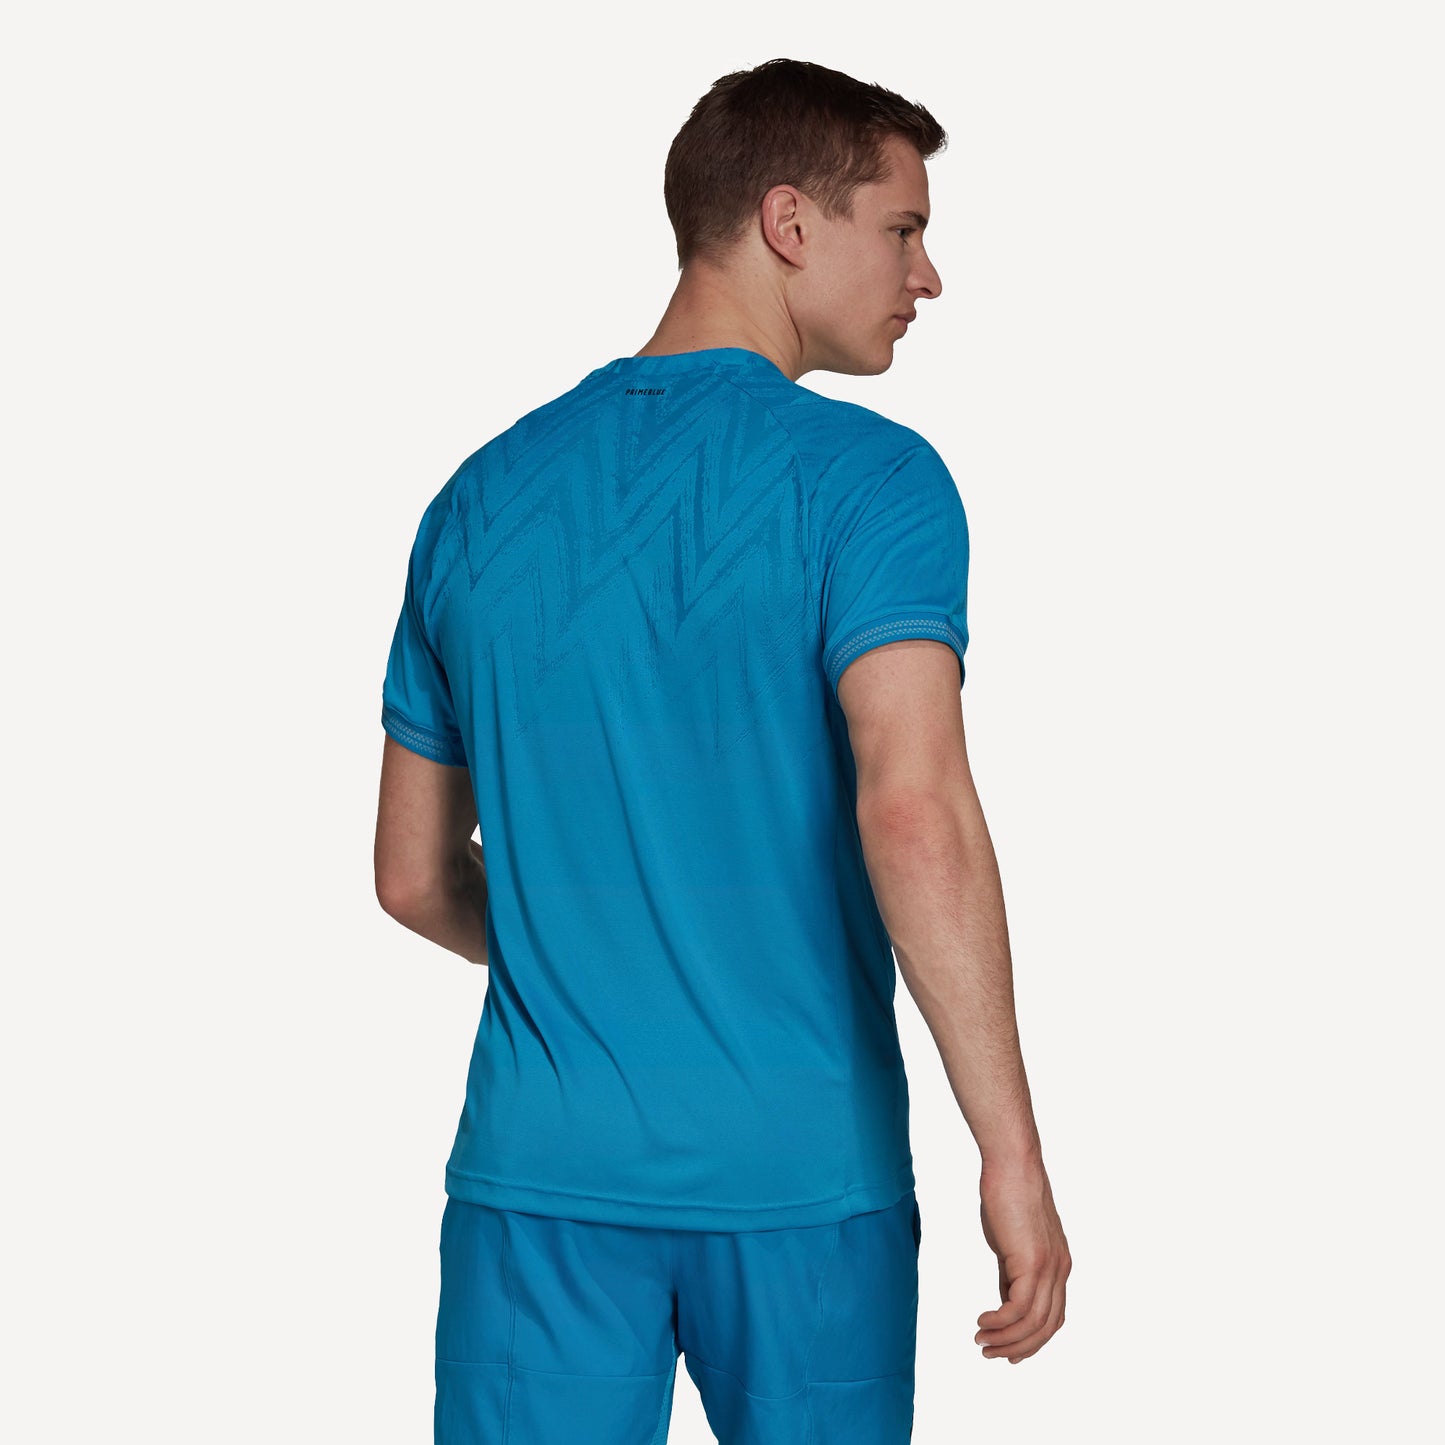 adidas Freelift Primeblue Men's Tennis Shirt Blue (2)